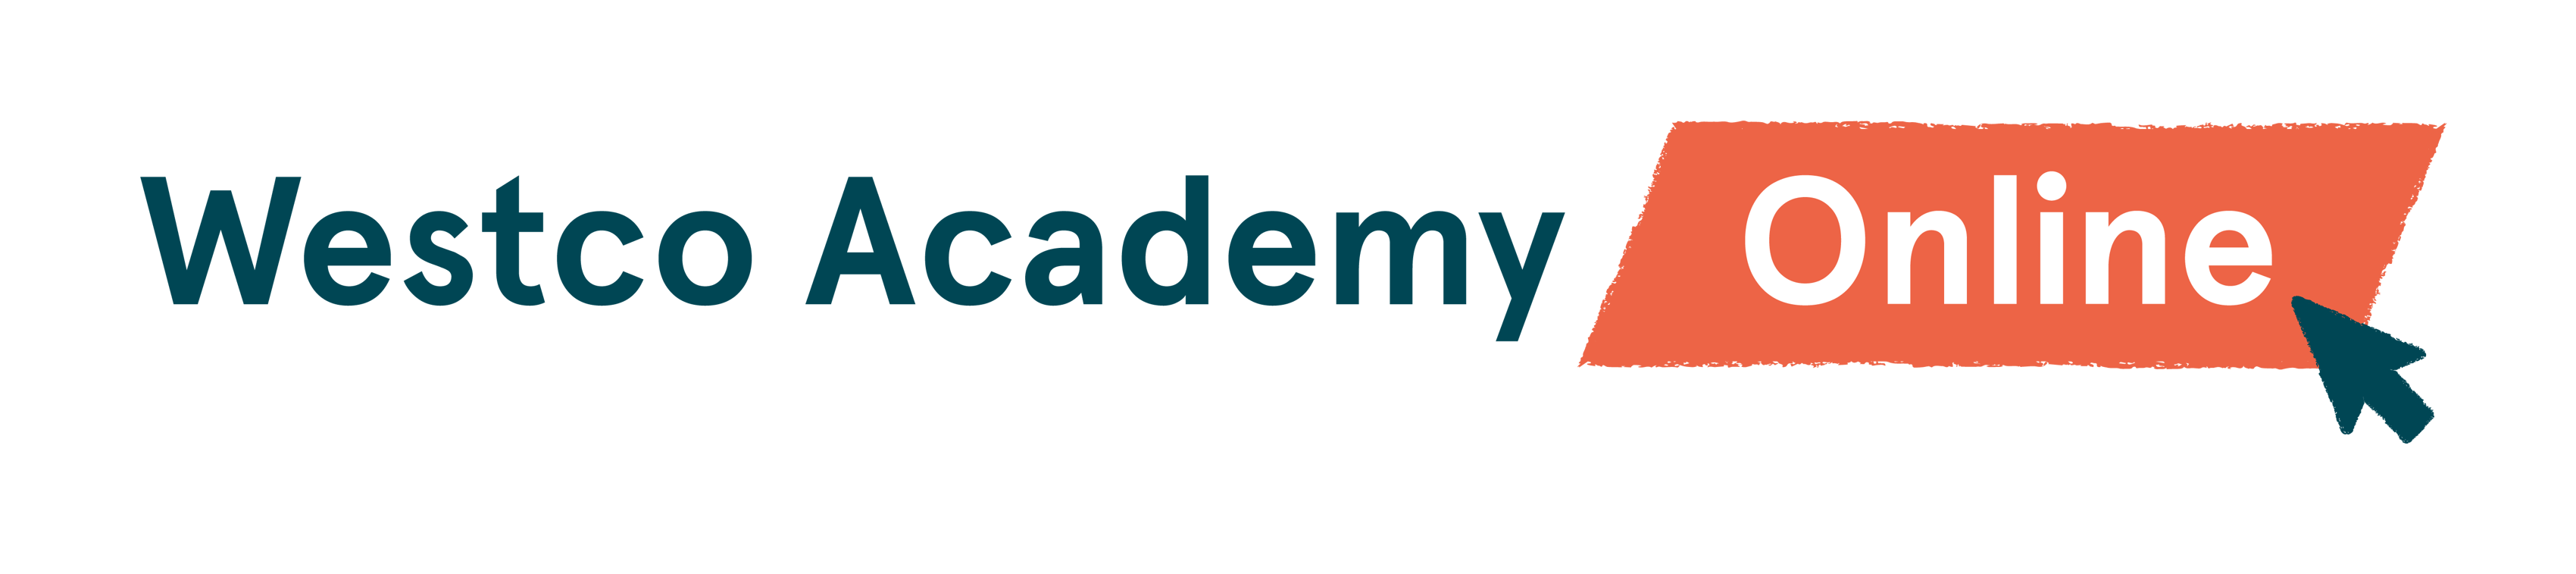 498_3 - WES_Westco_Academy_page_logo